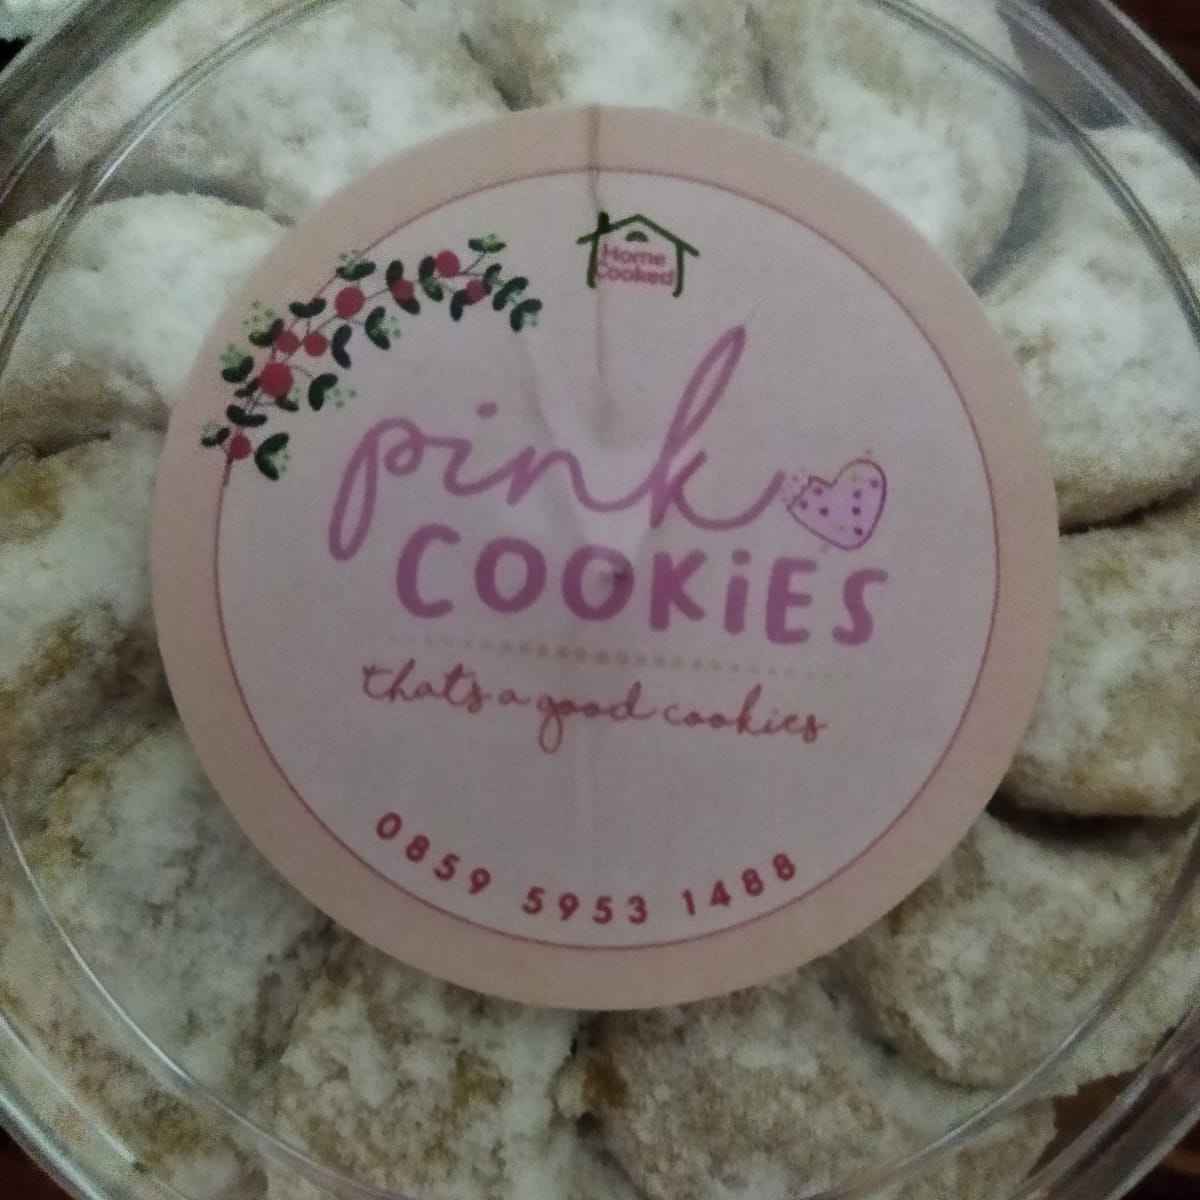 Snoow Moon Cookies